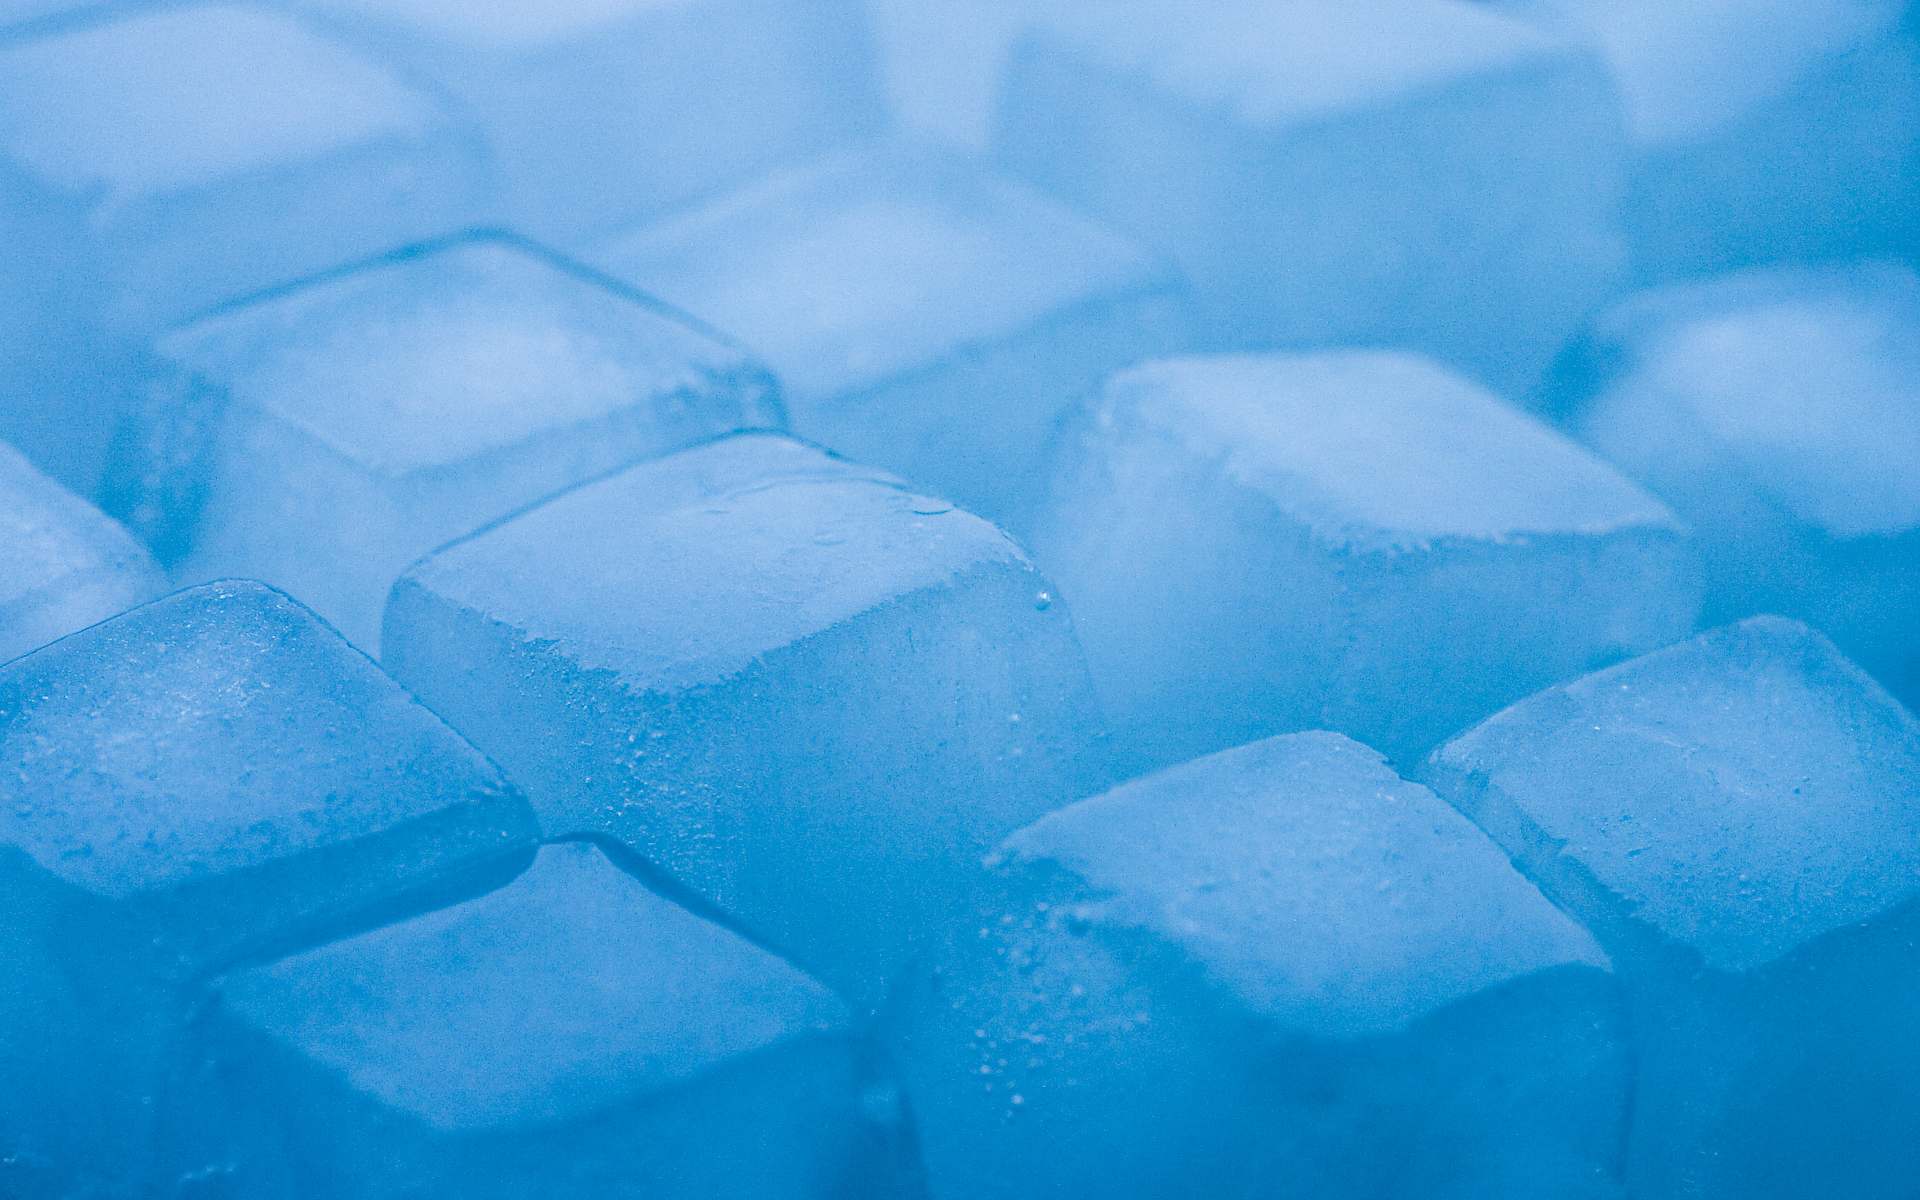 ice, cubes, digital art - desktop wallpaper